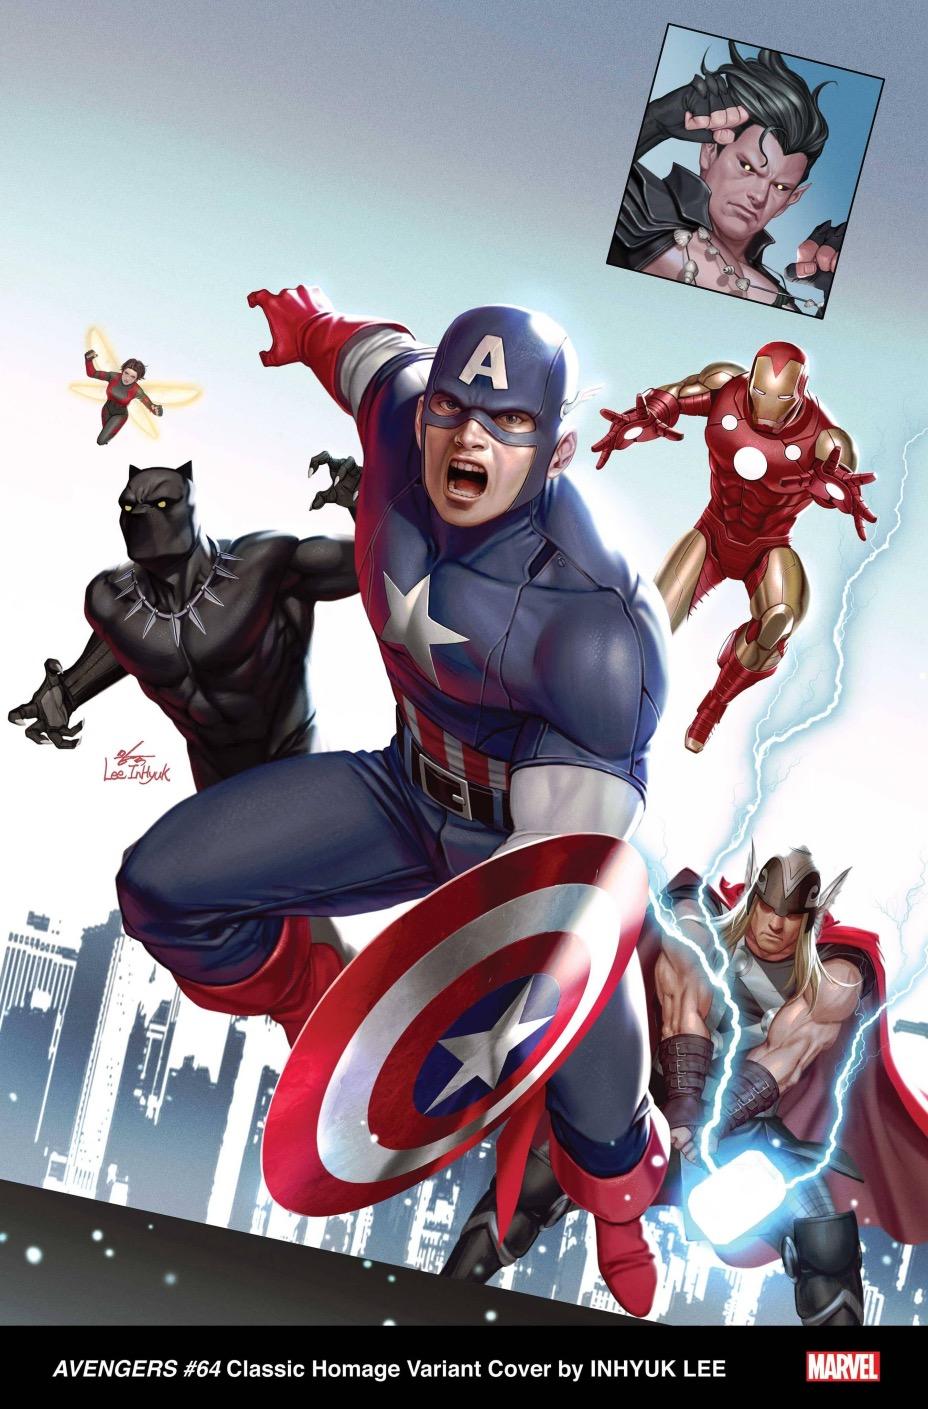 Marvel Variants Reimagine Marvel's Classic Comic Covers